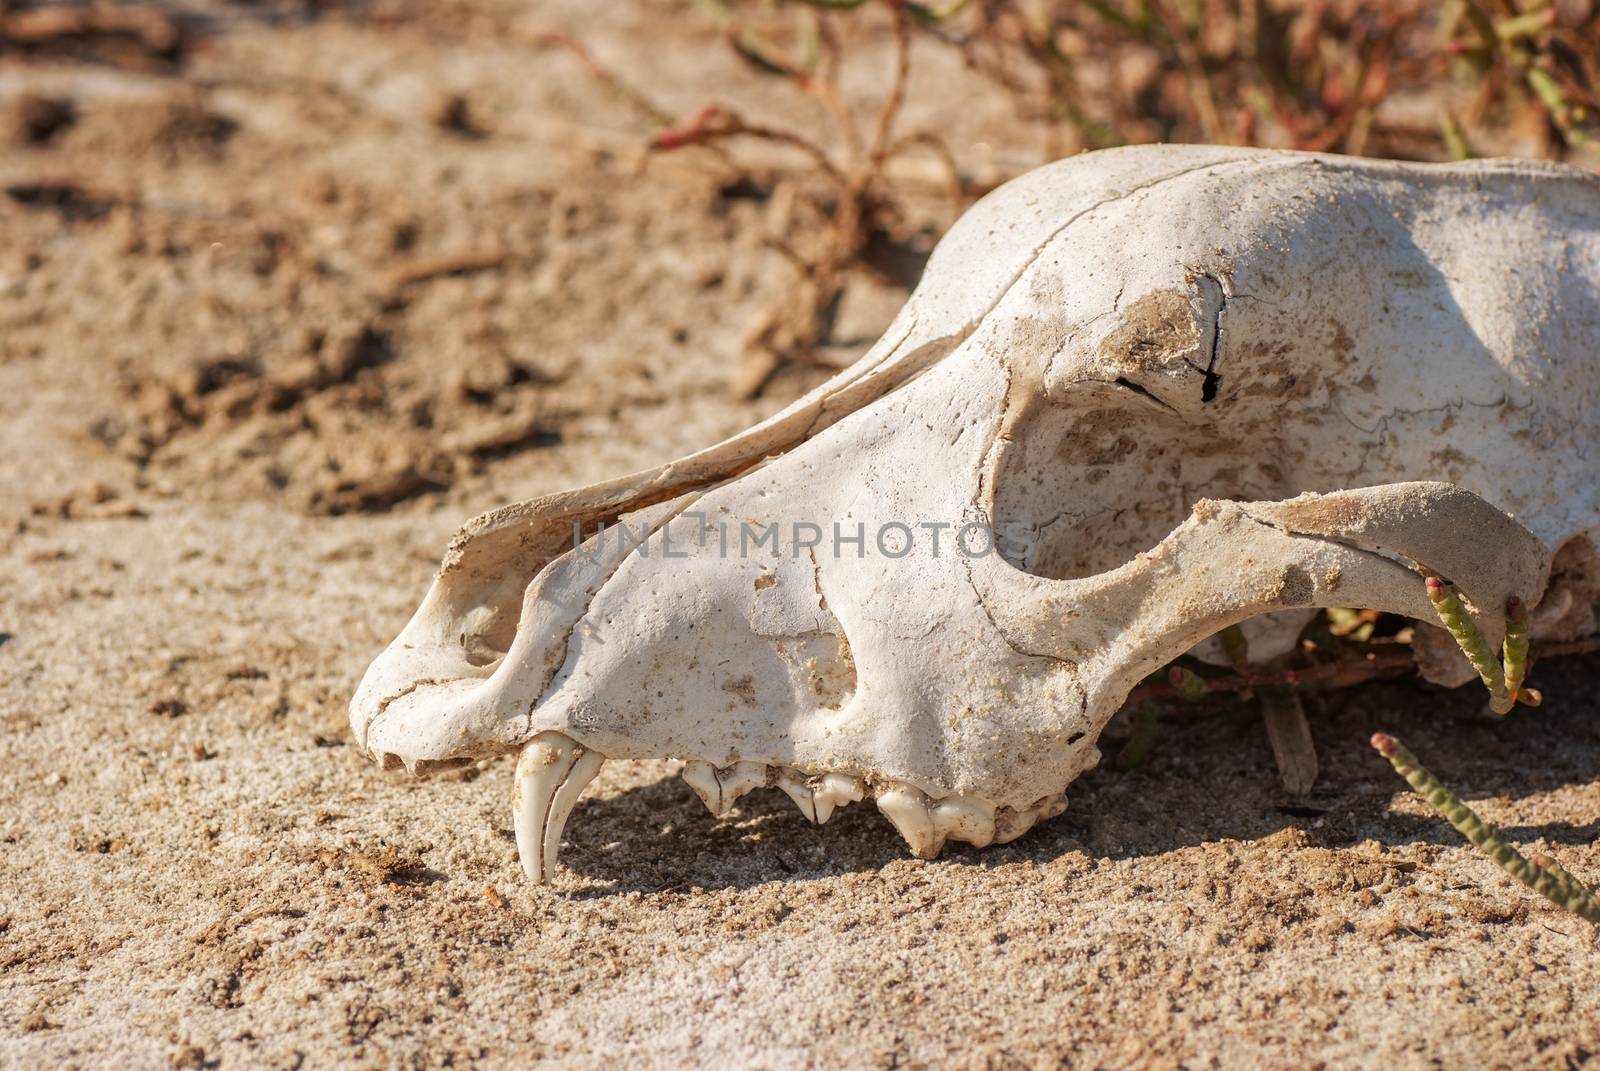 Old dog skull left in the grass